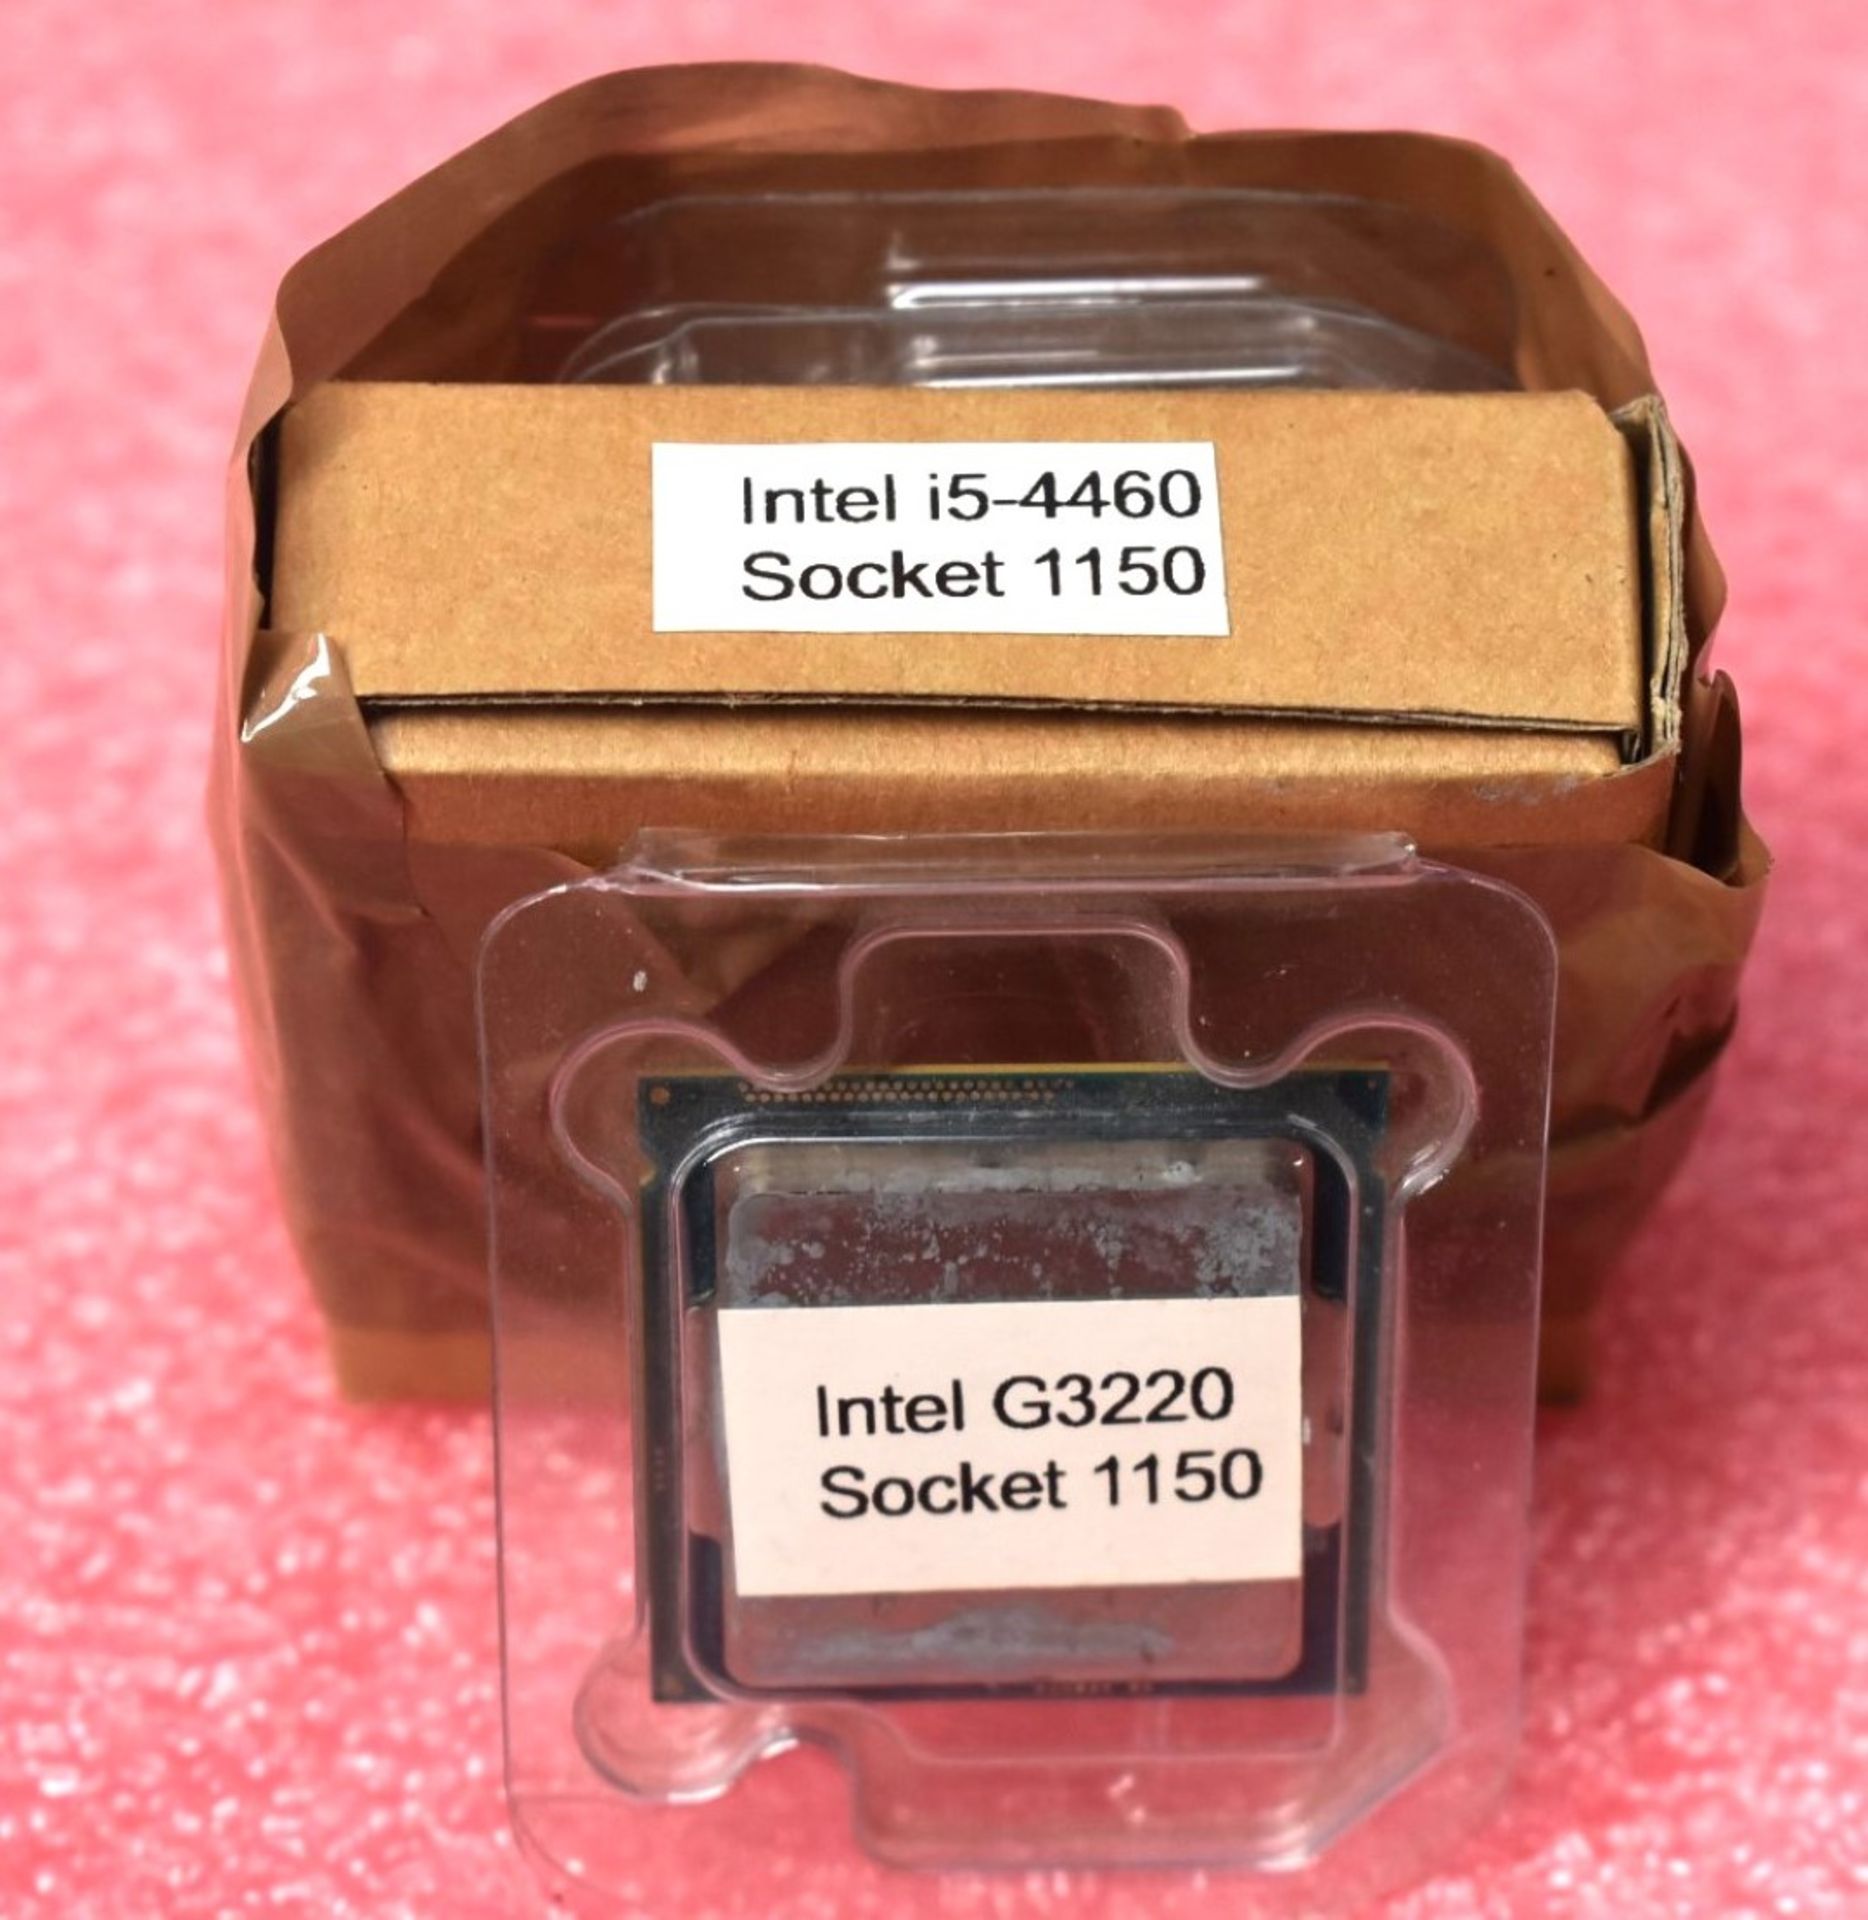 4 x Intel Socket LA1150 Desktop PC Processors - Includes 1 x I5-4460, 2 x G3220 and 1 x I5-4460 - Bild 3 aus 3